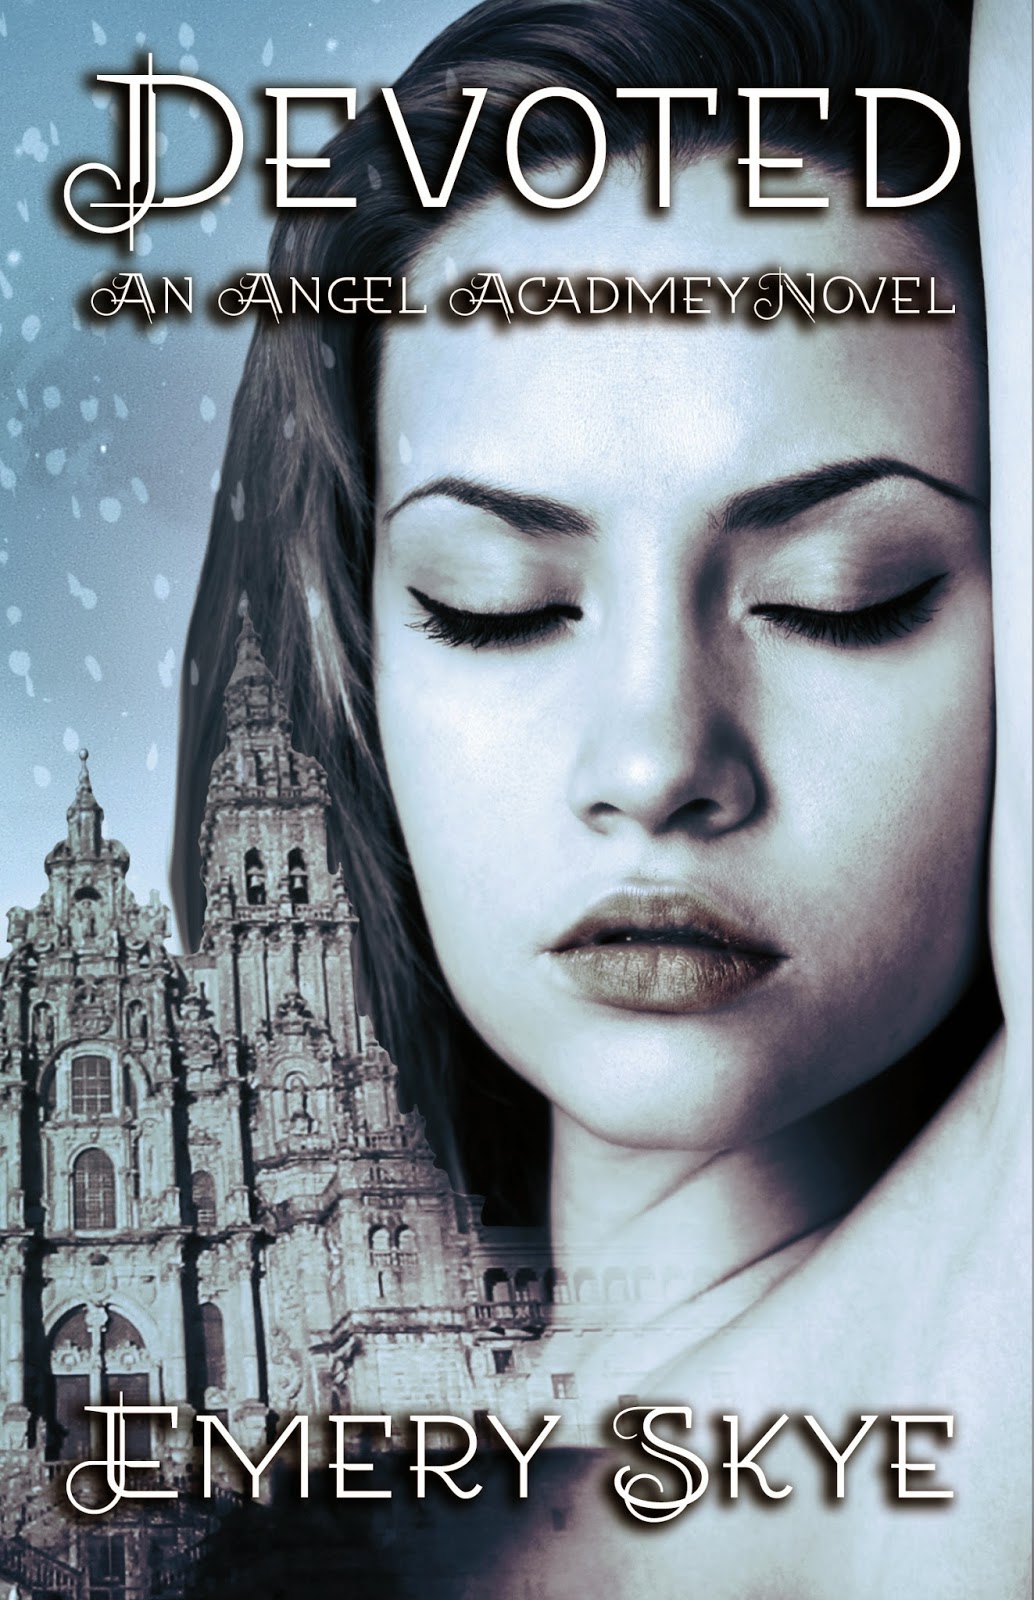 http://www.amazon.com/Devoted-Angel-Academy-Novel-Book-ebook/dp/B00MWZDSM8/ref=as_sl_pc_ss_til?tag=lemonpress-20&linkCode=w01&linkId=MMOZAWCH6E6QJD4R&creativeASIN=B00MWZDSM8